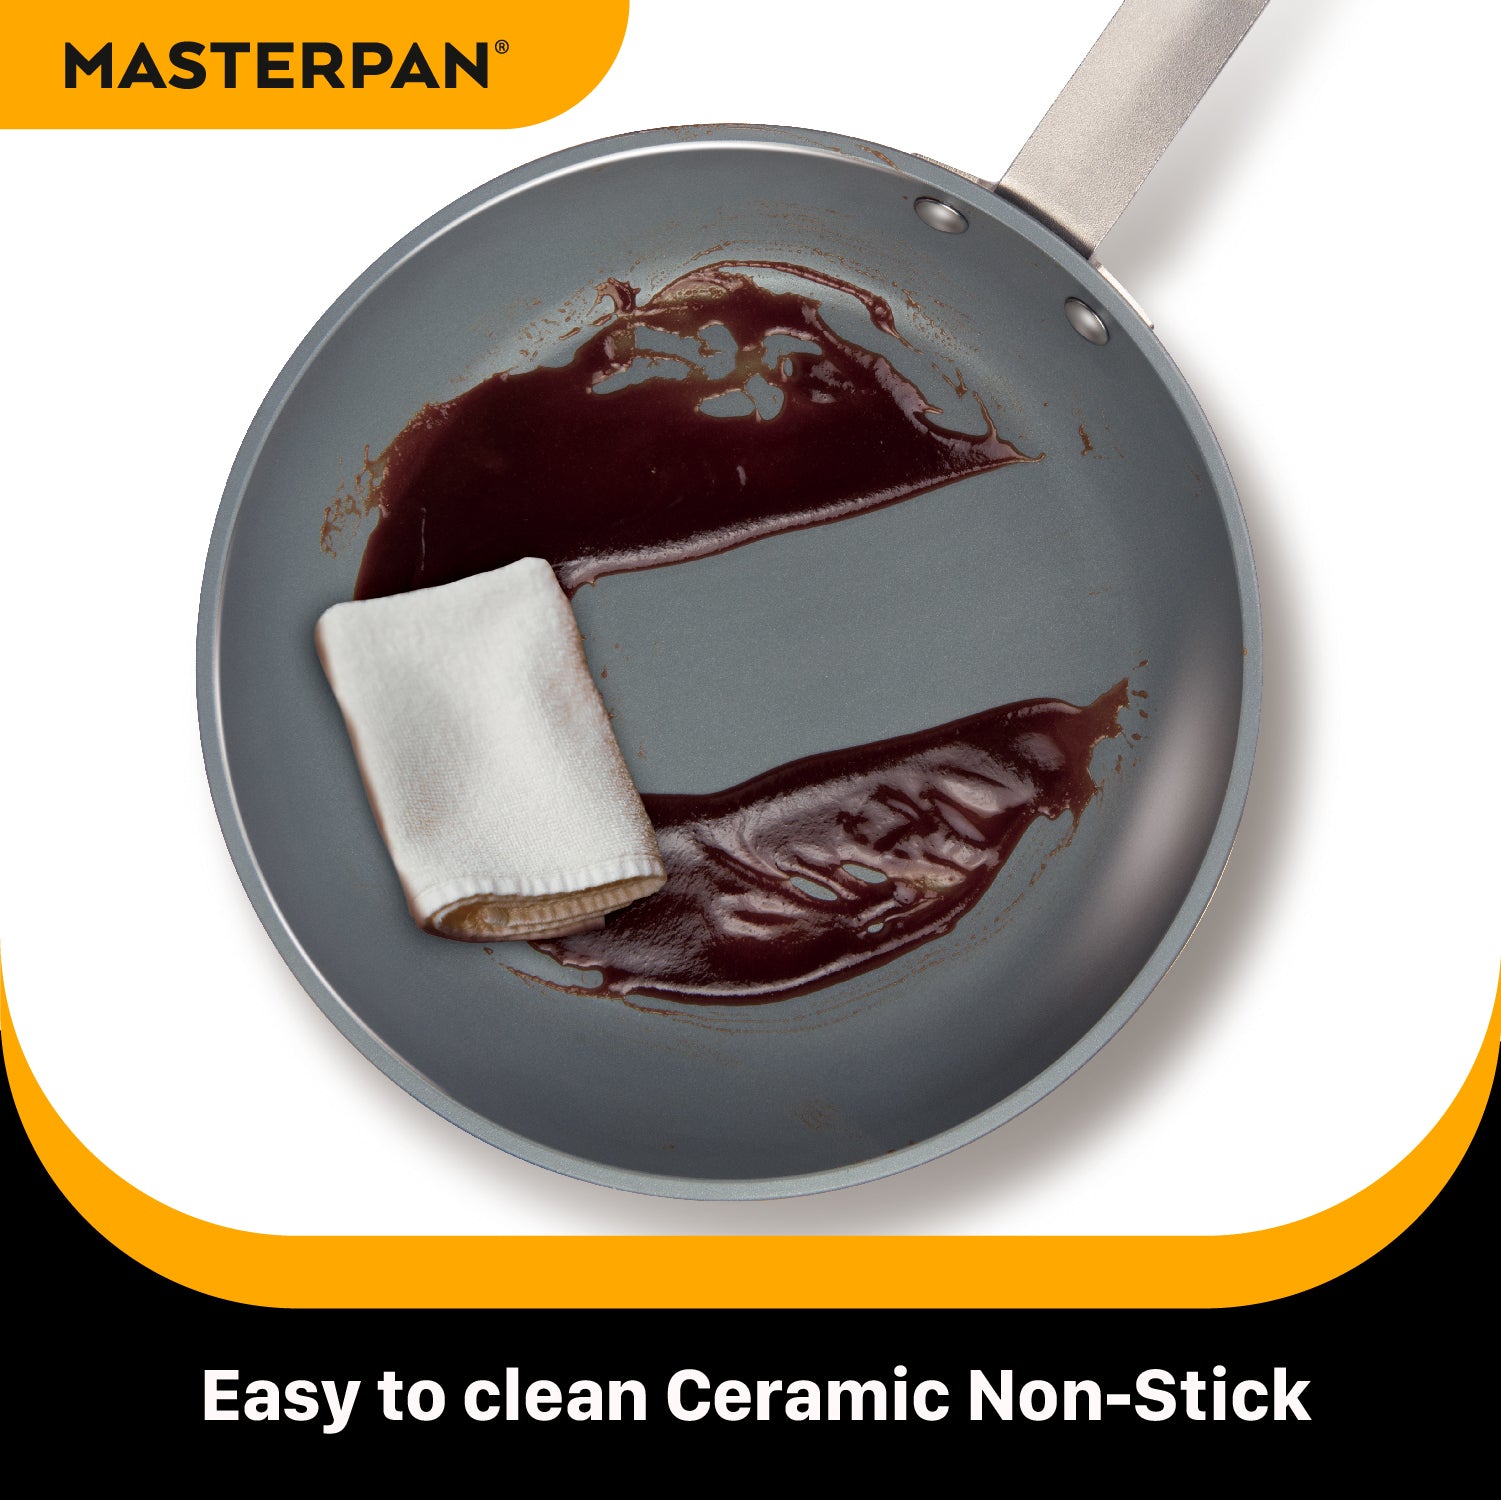 MASTERPAN Ceramic Nonstick Copper Color Frypan & Skillet 2-pc Set, 8 